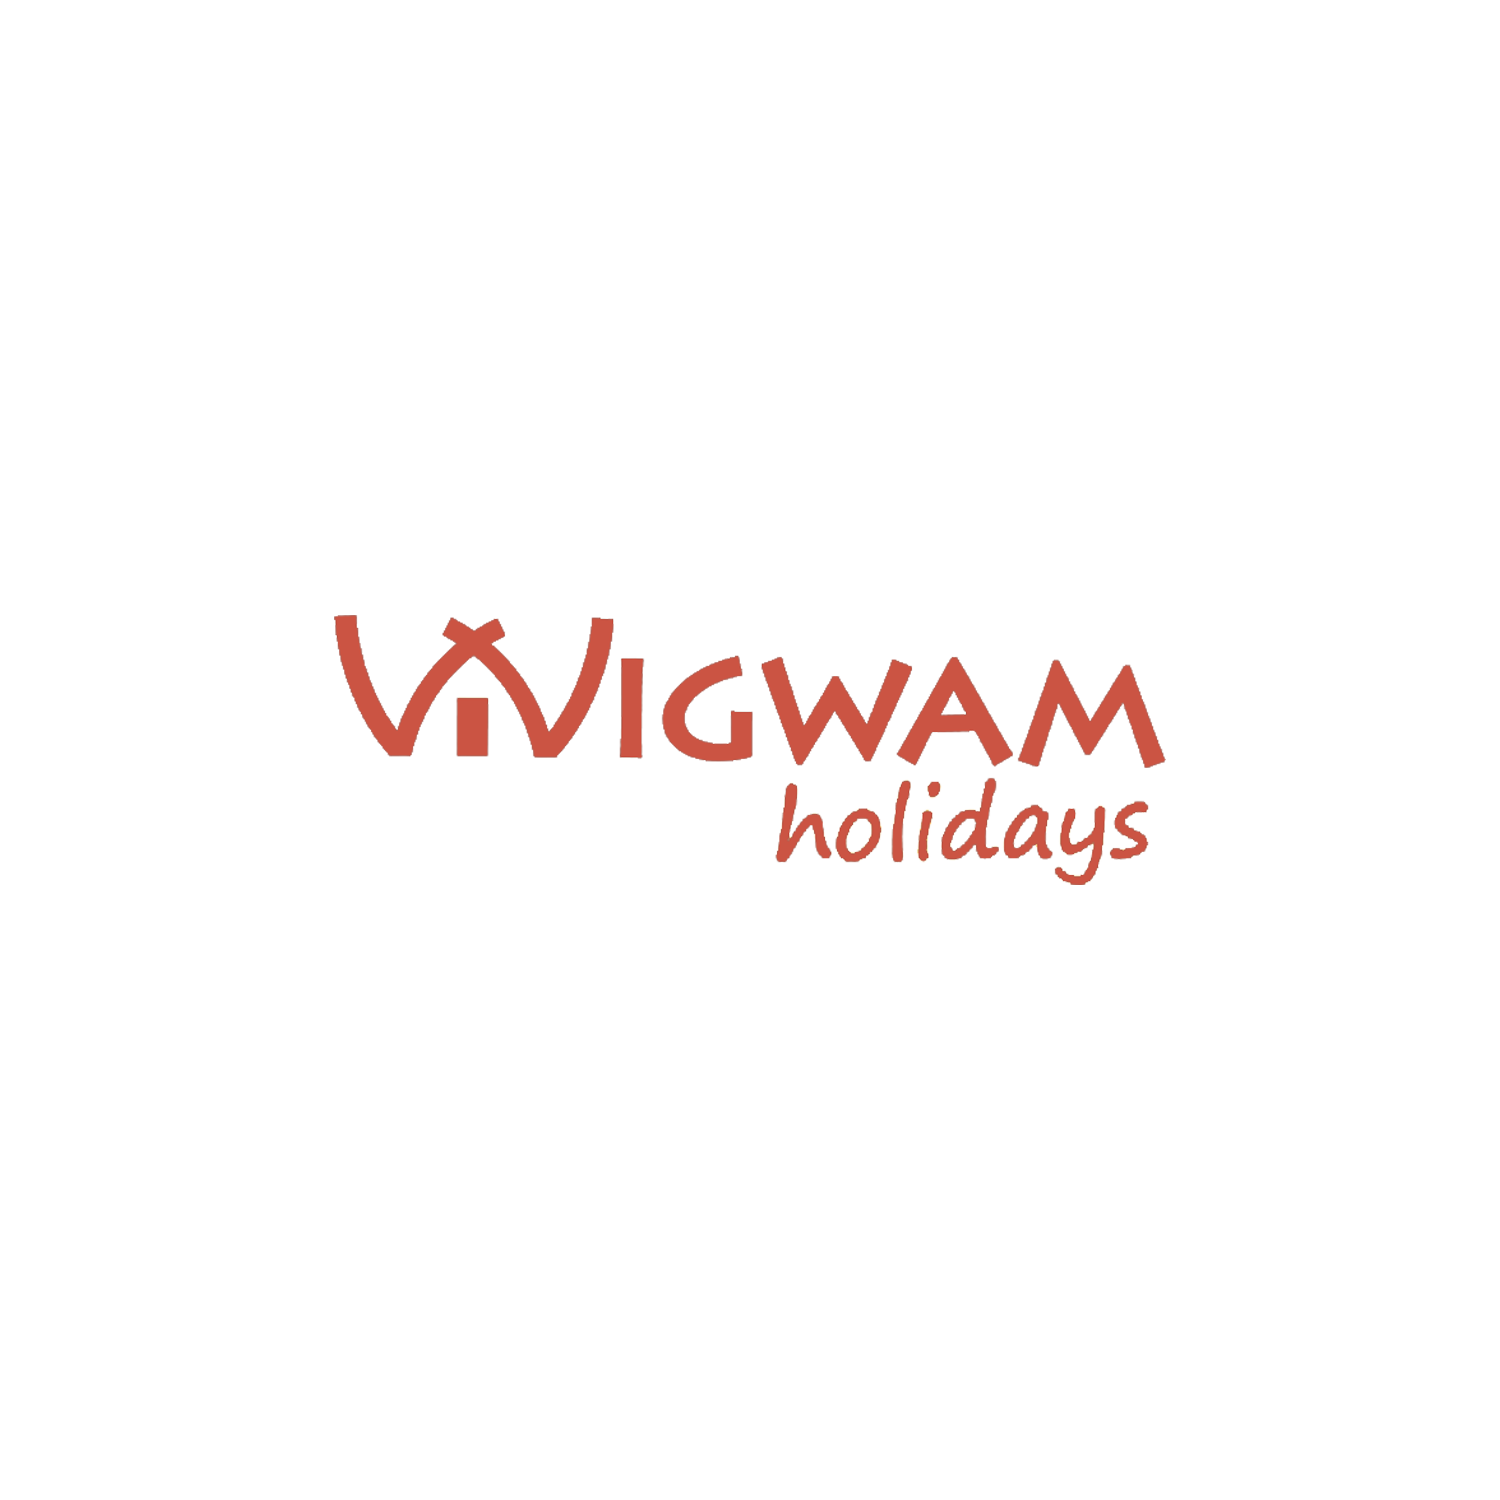 wigwam logo red